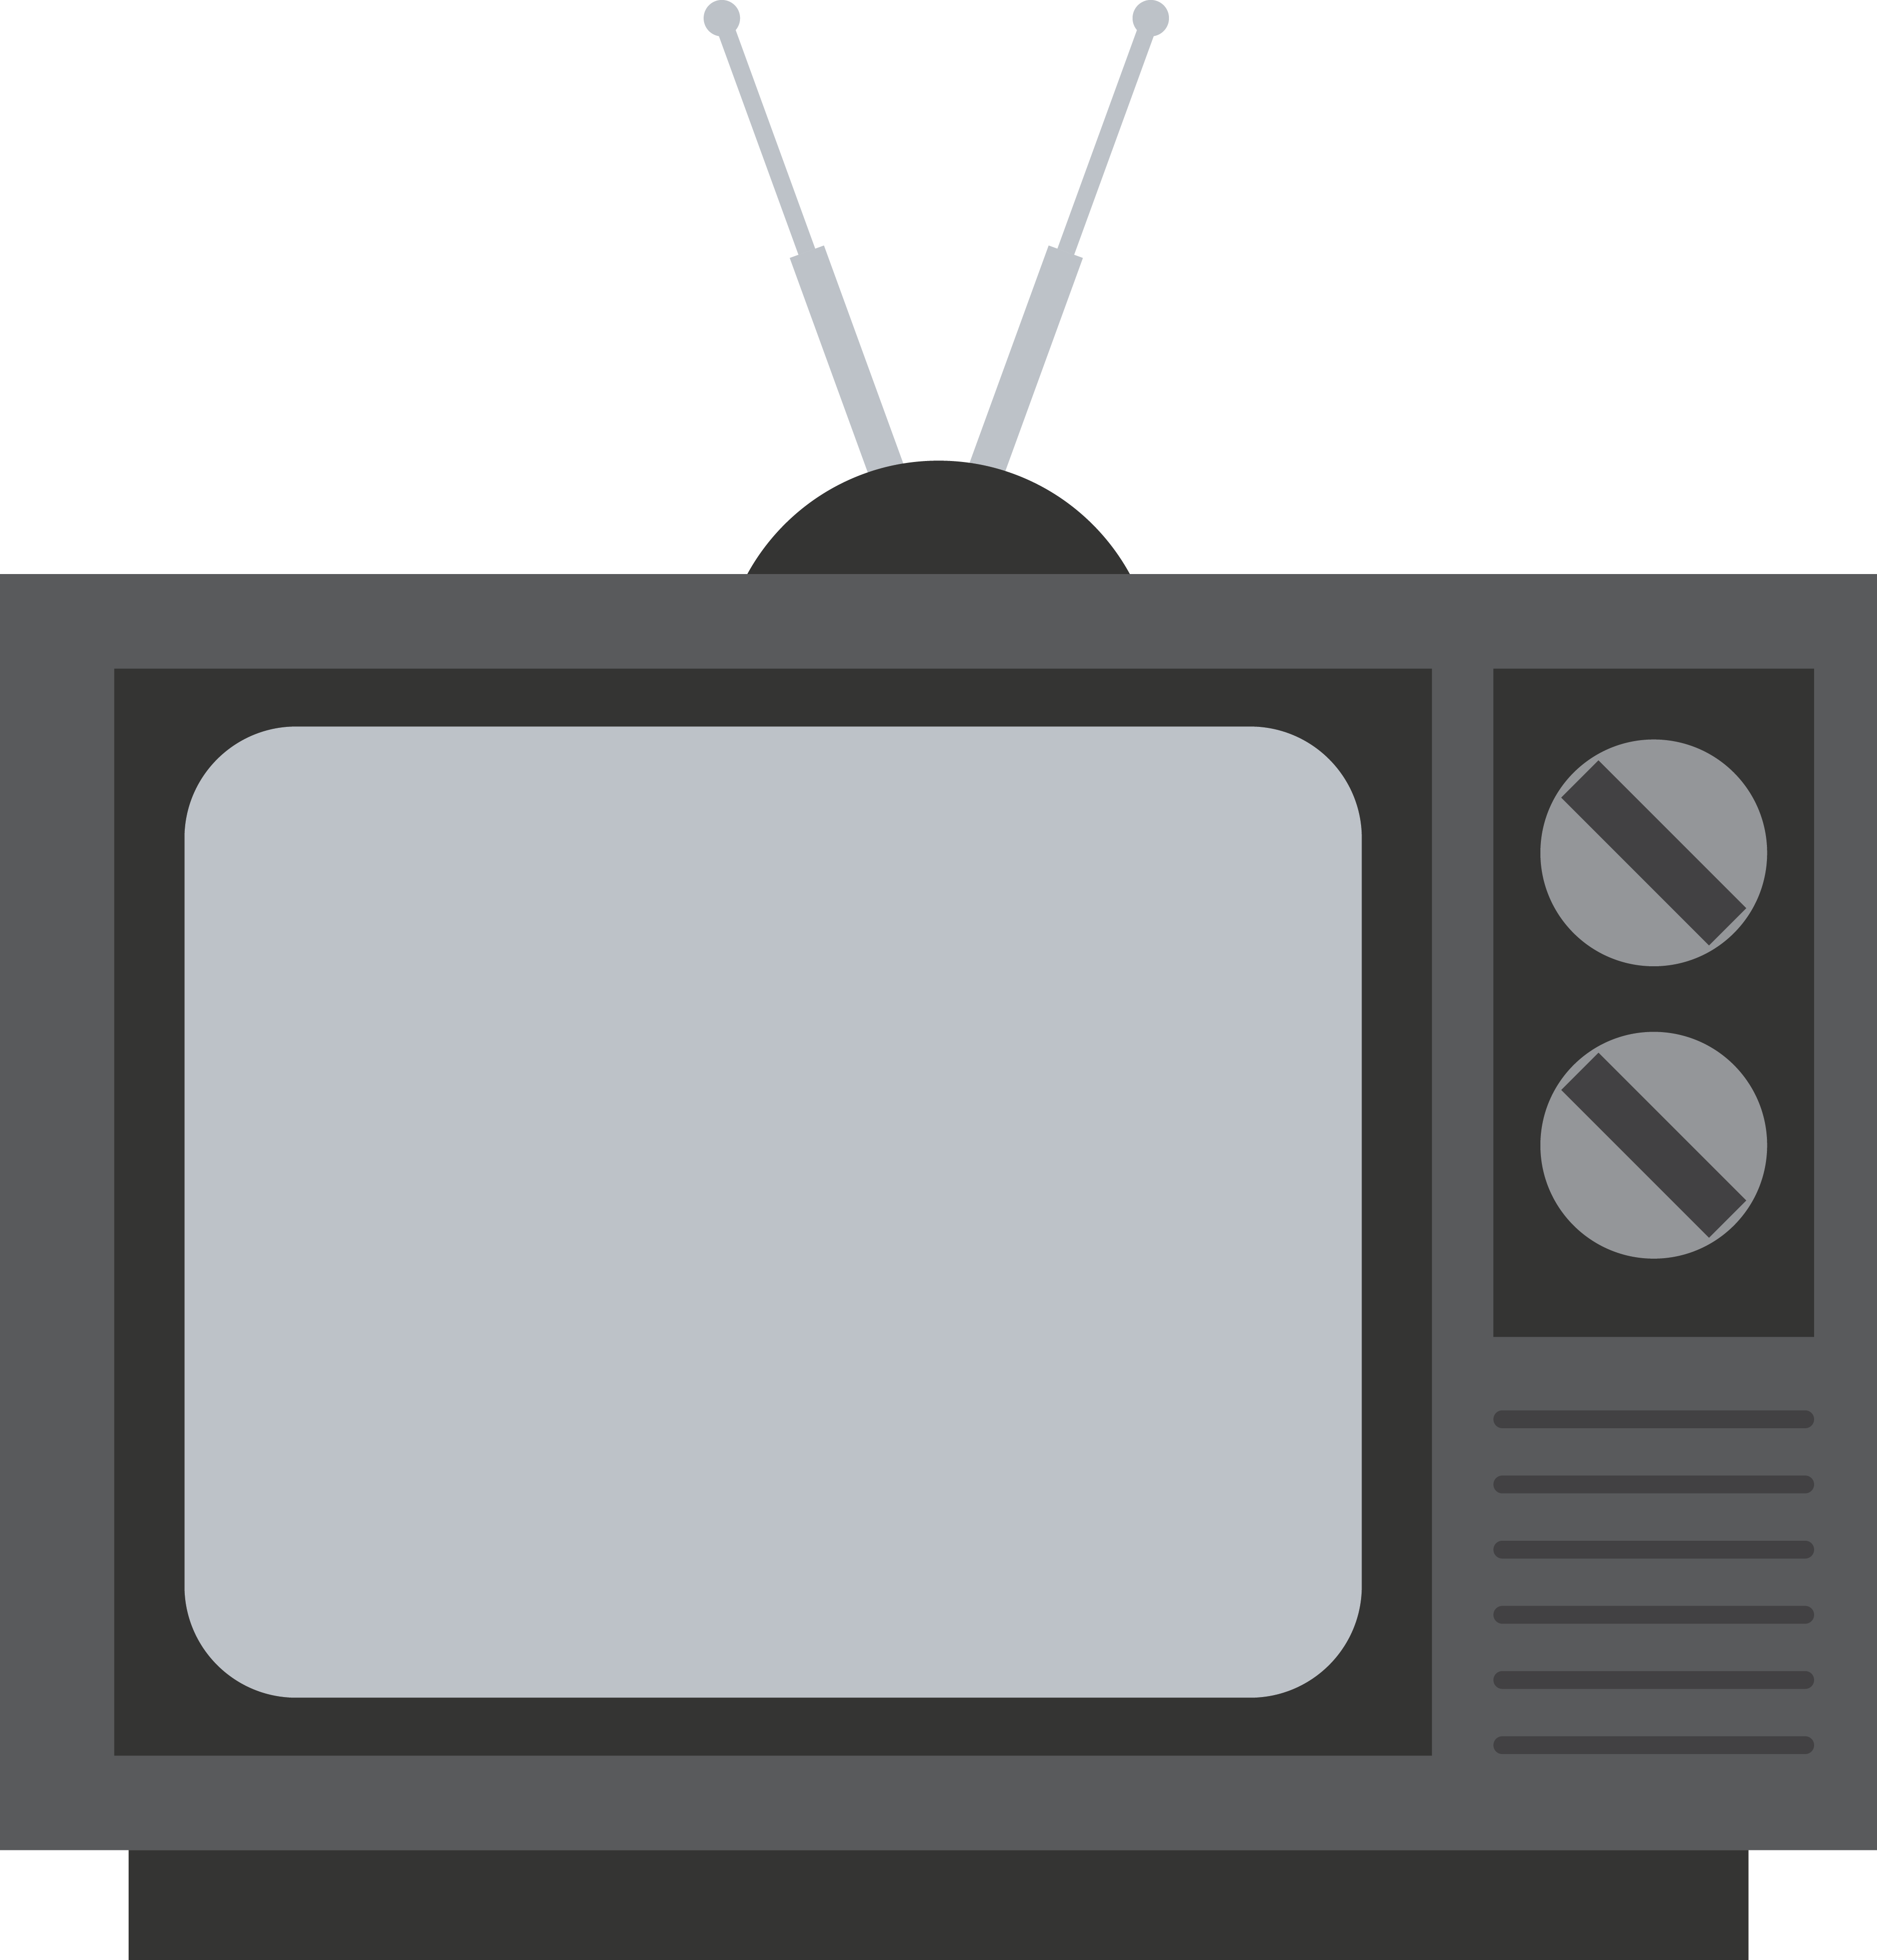 Televisionrectangletelevision setfonttechnologyscreen .